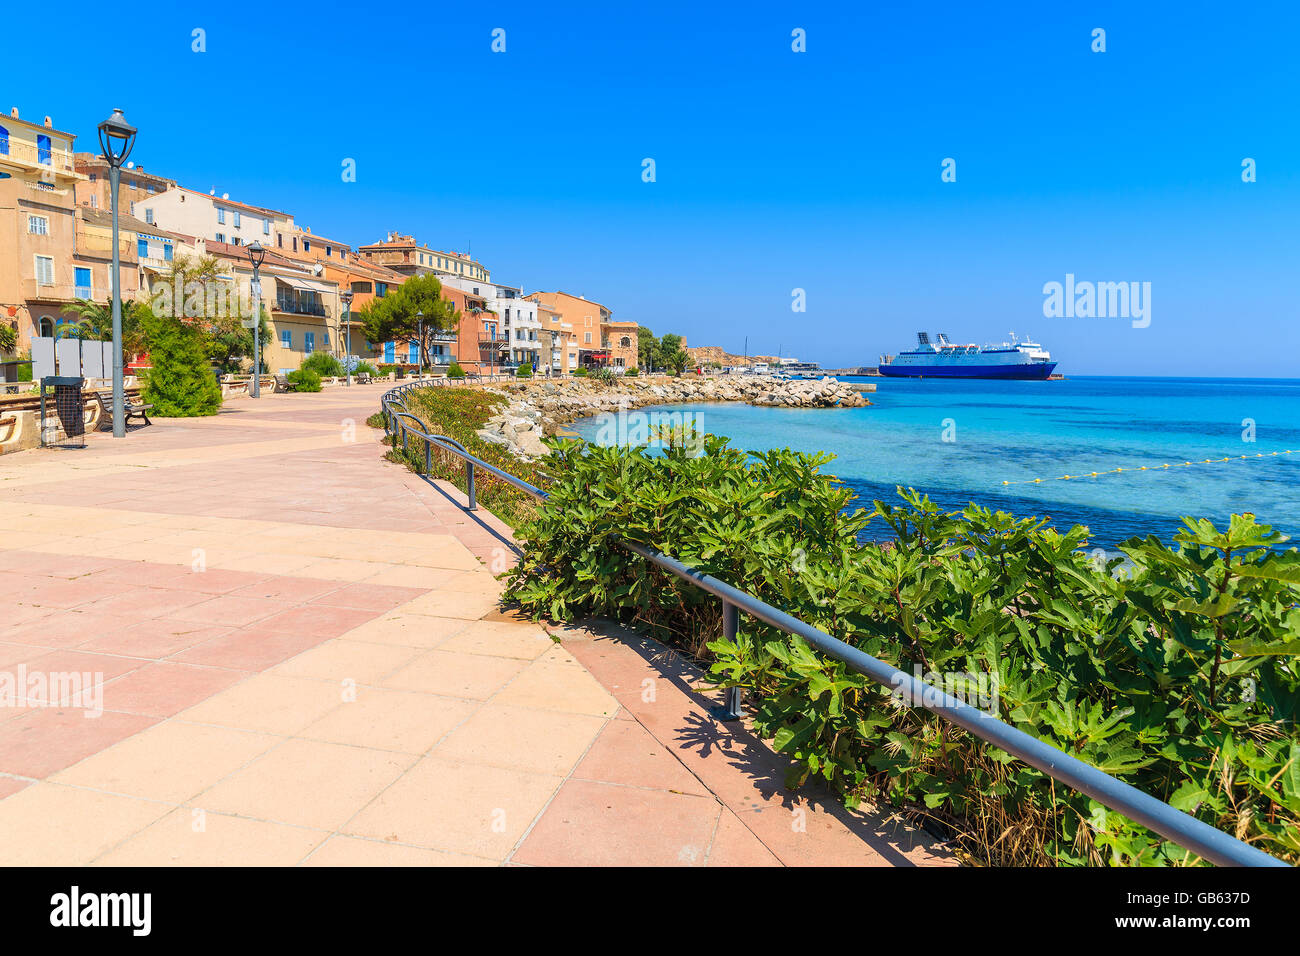 Promenade entlang Meer in Küstenstadt Ile Rousse, Korsika, Frankreich Stockfoto